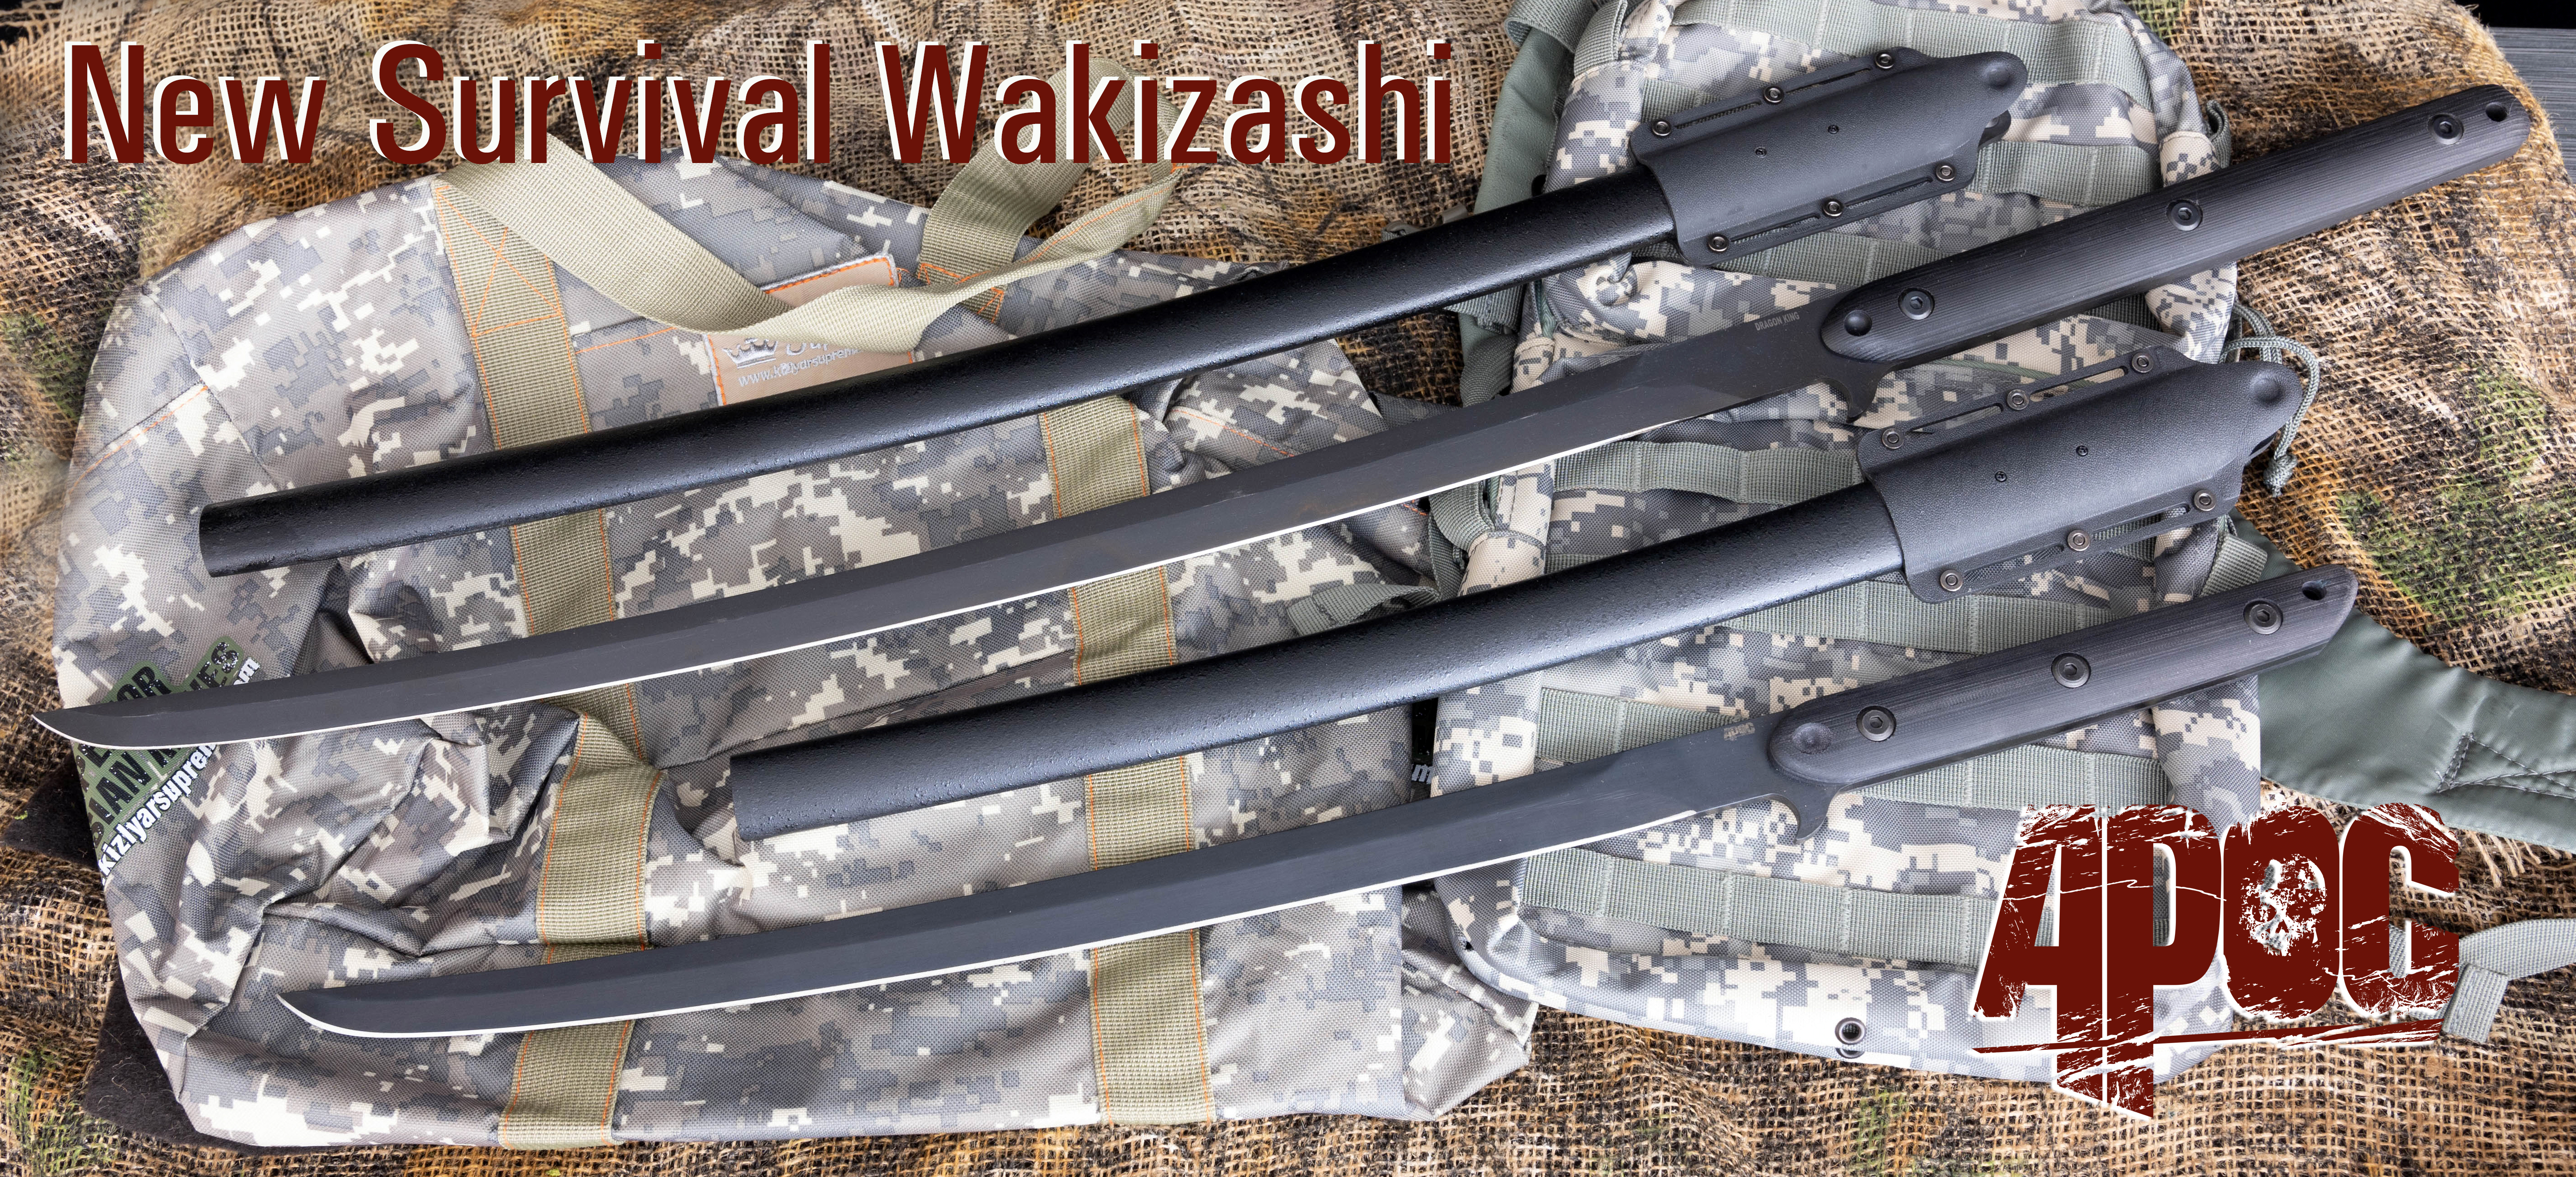 New Survival Wakizashi in stock!